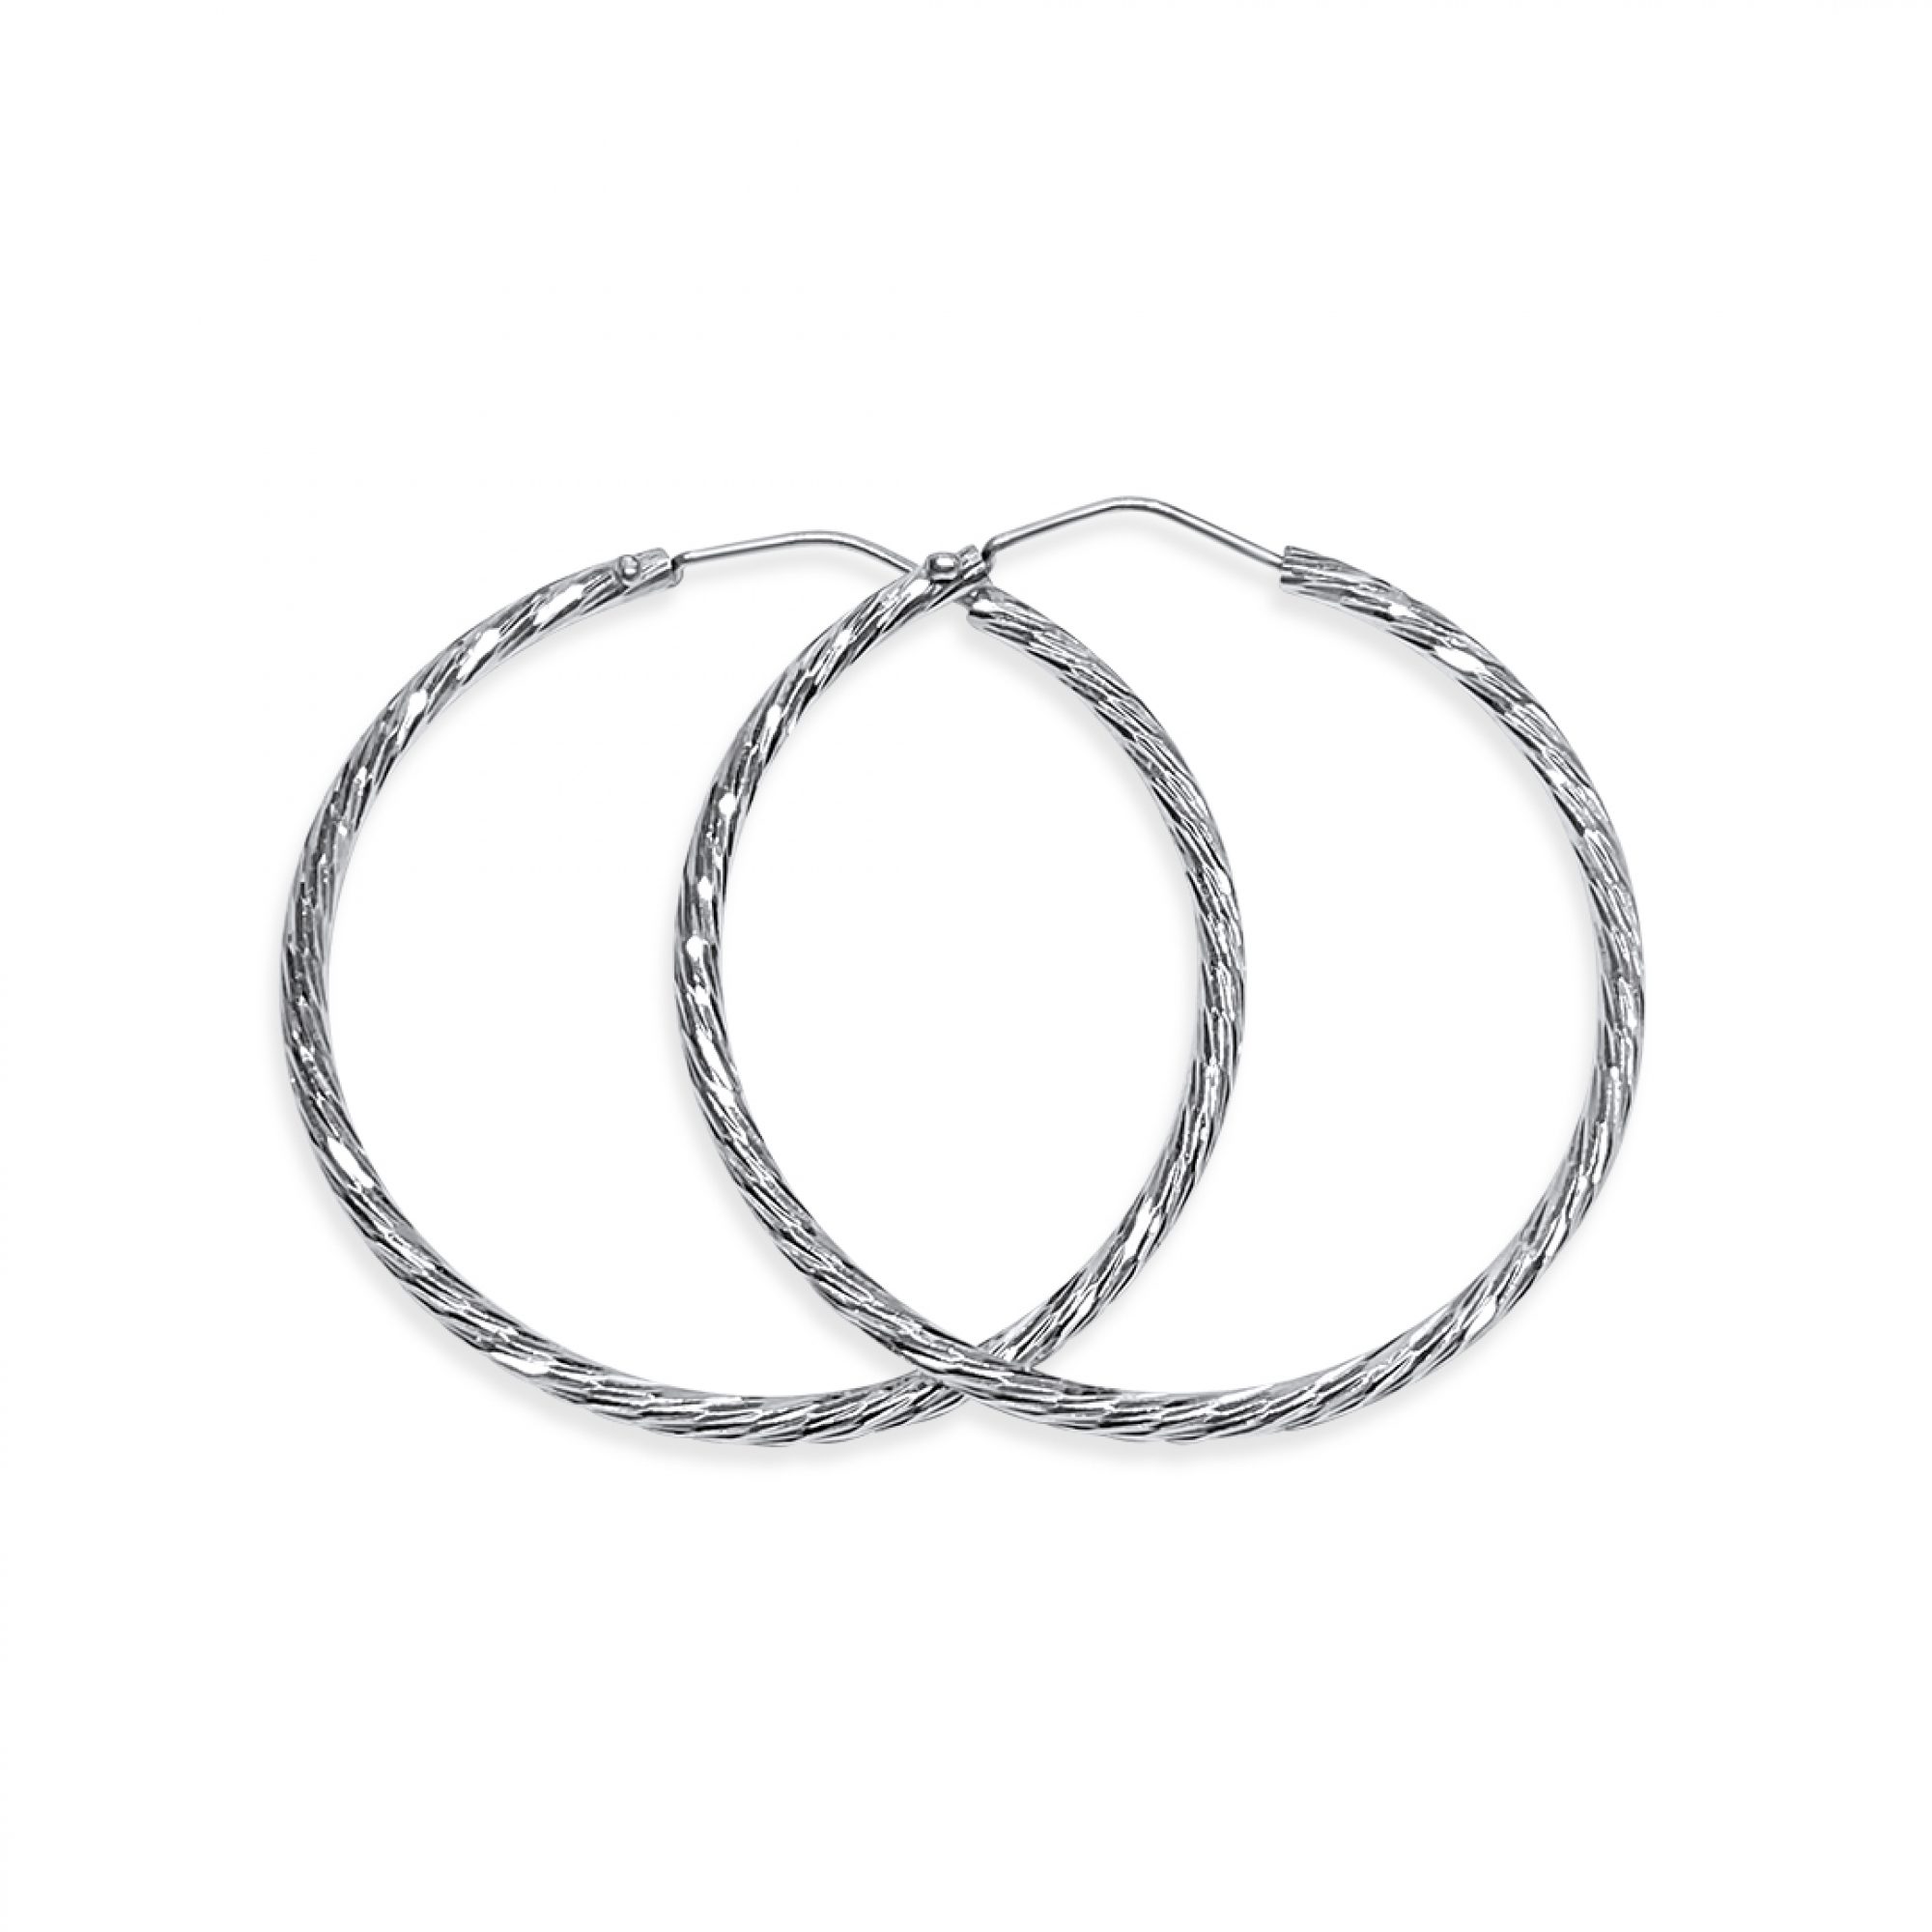 Silver engraved hoops (40mm)